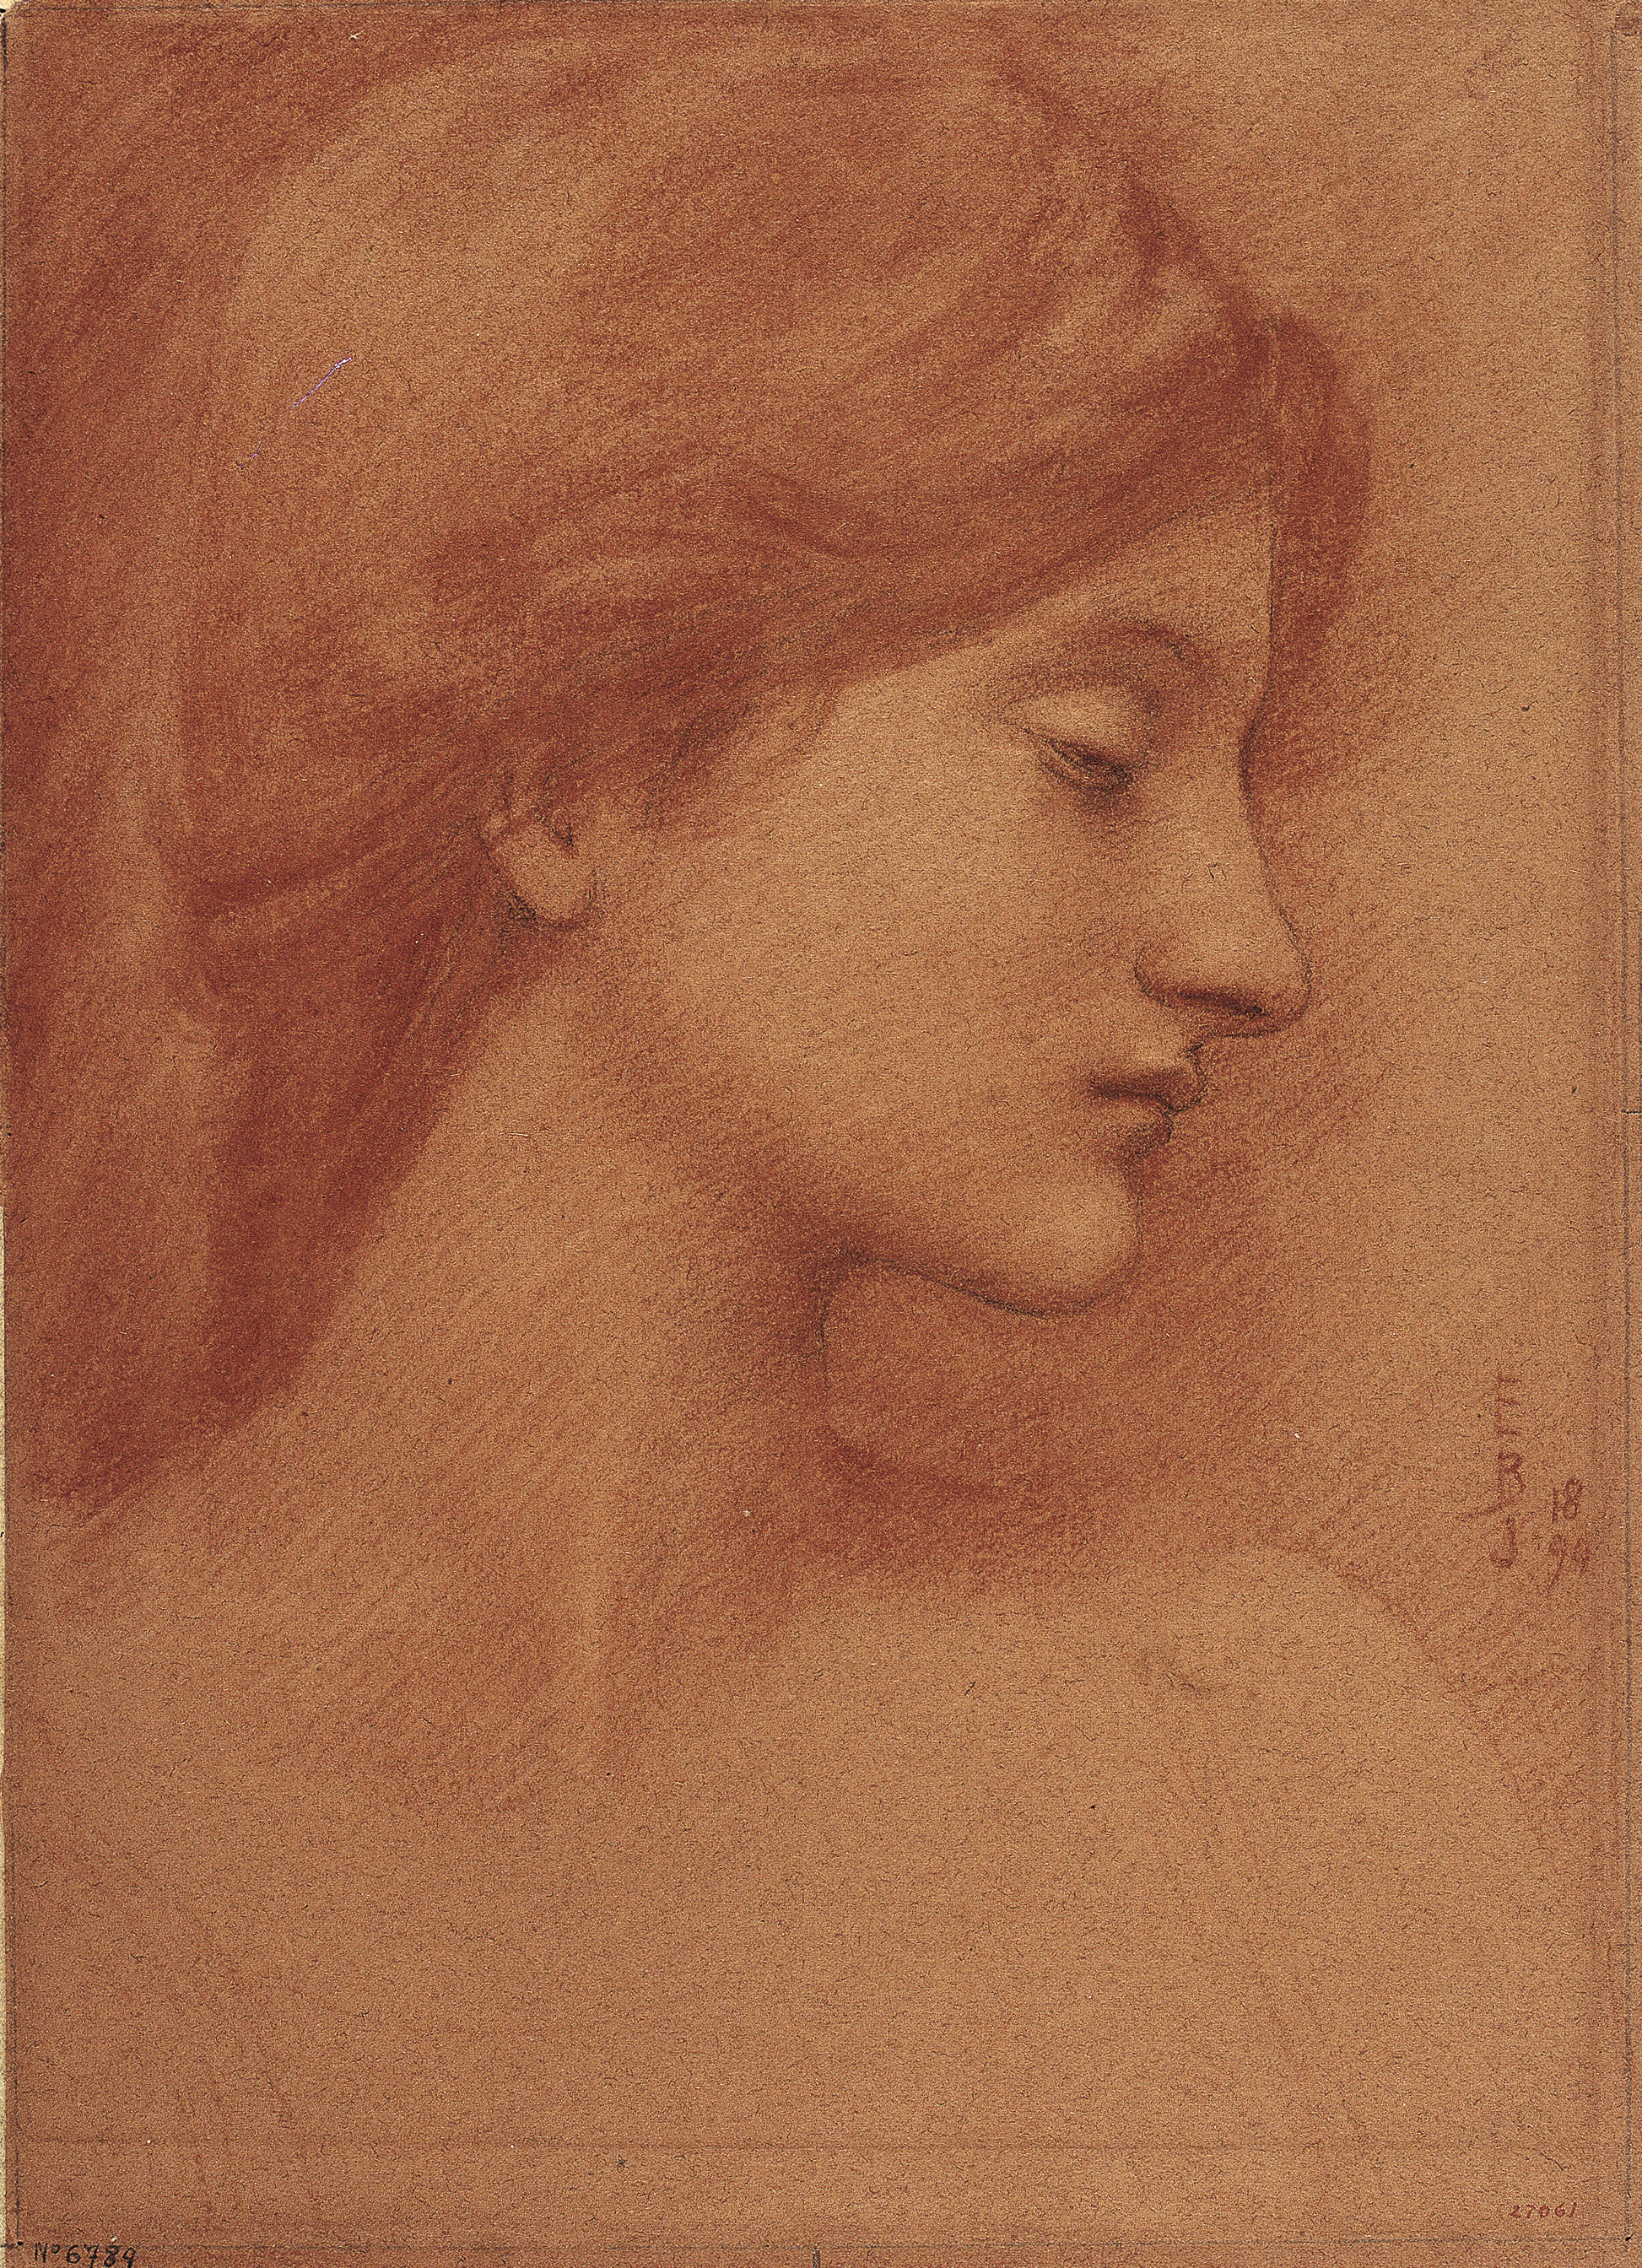 Edward Burne-Jones, Study of a Female Head, 1894